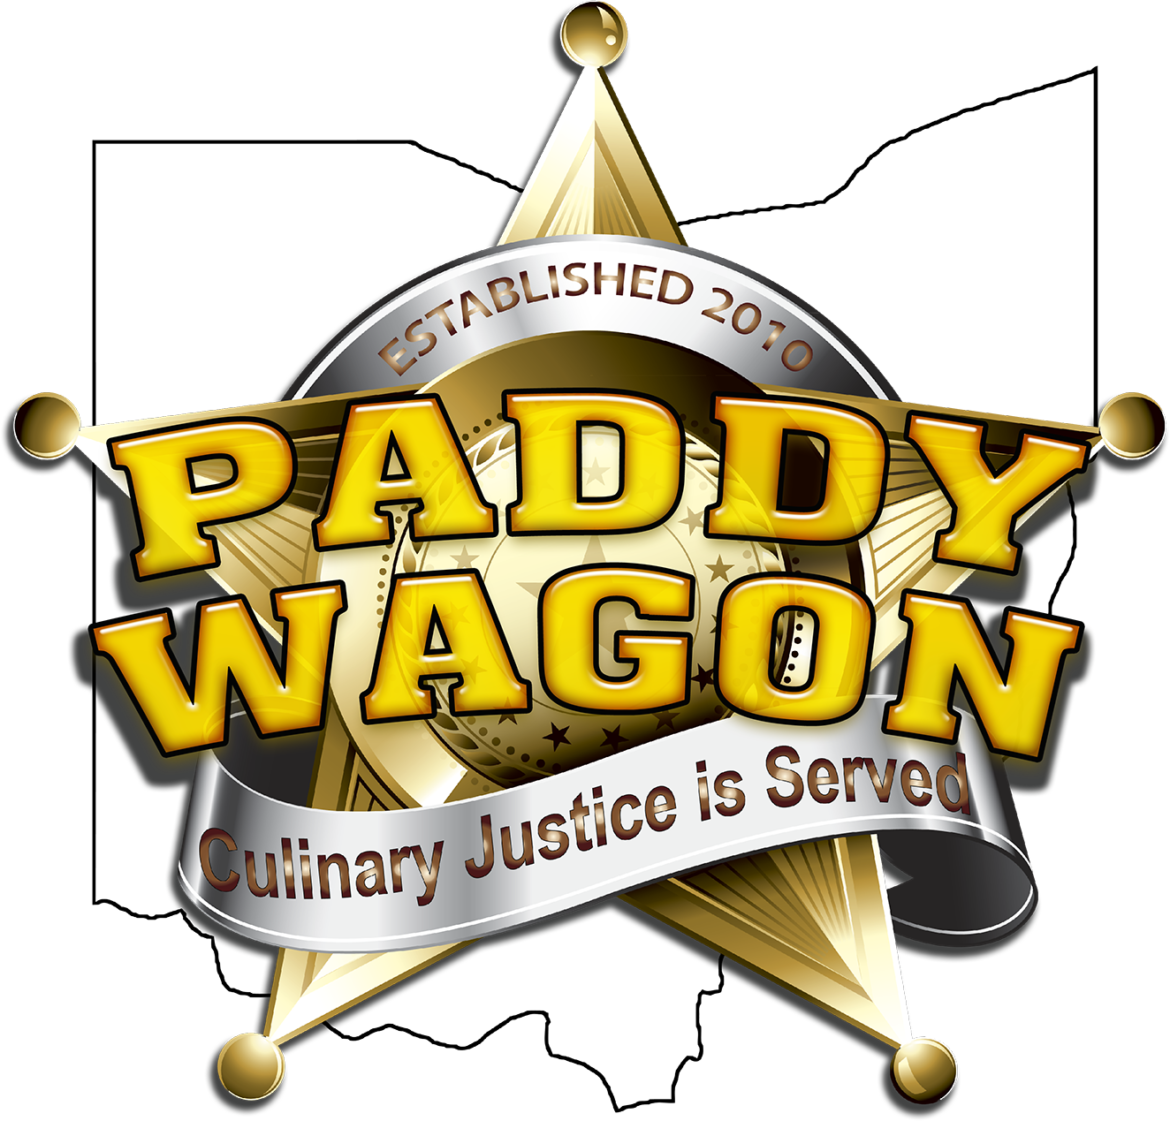 Paddy-Wagon-Food-Truck.tif